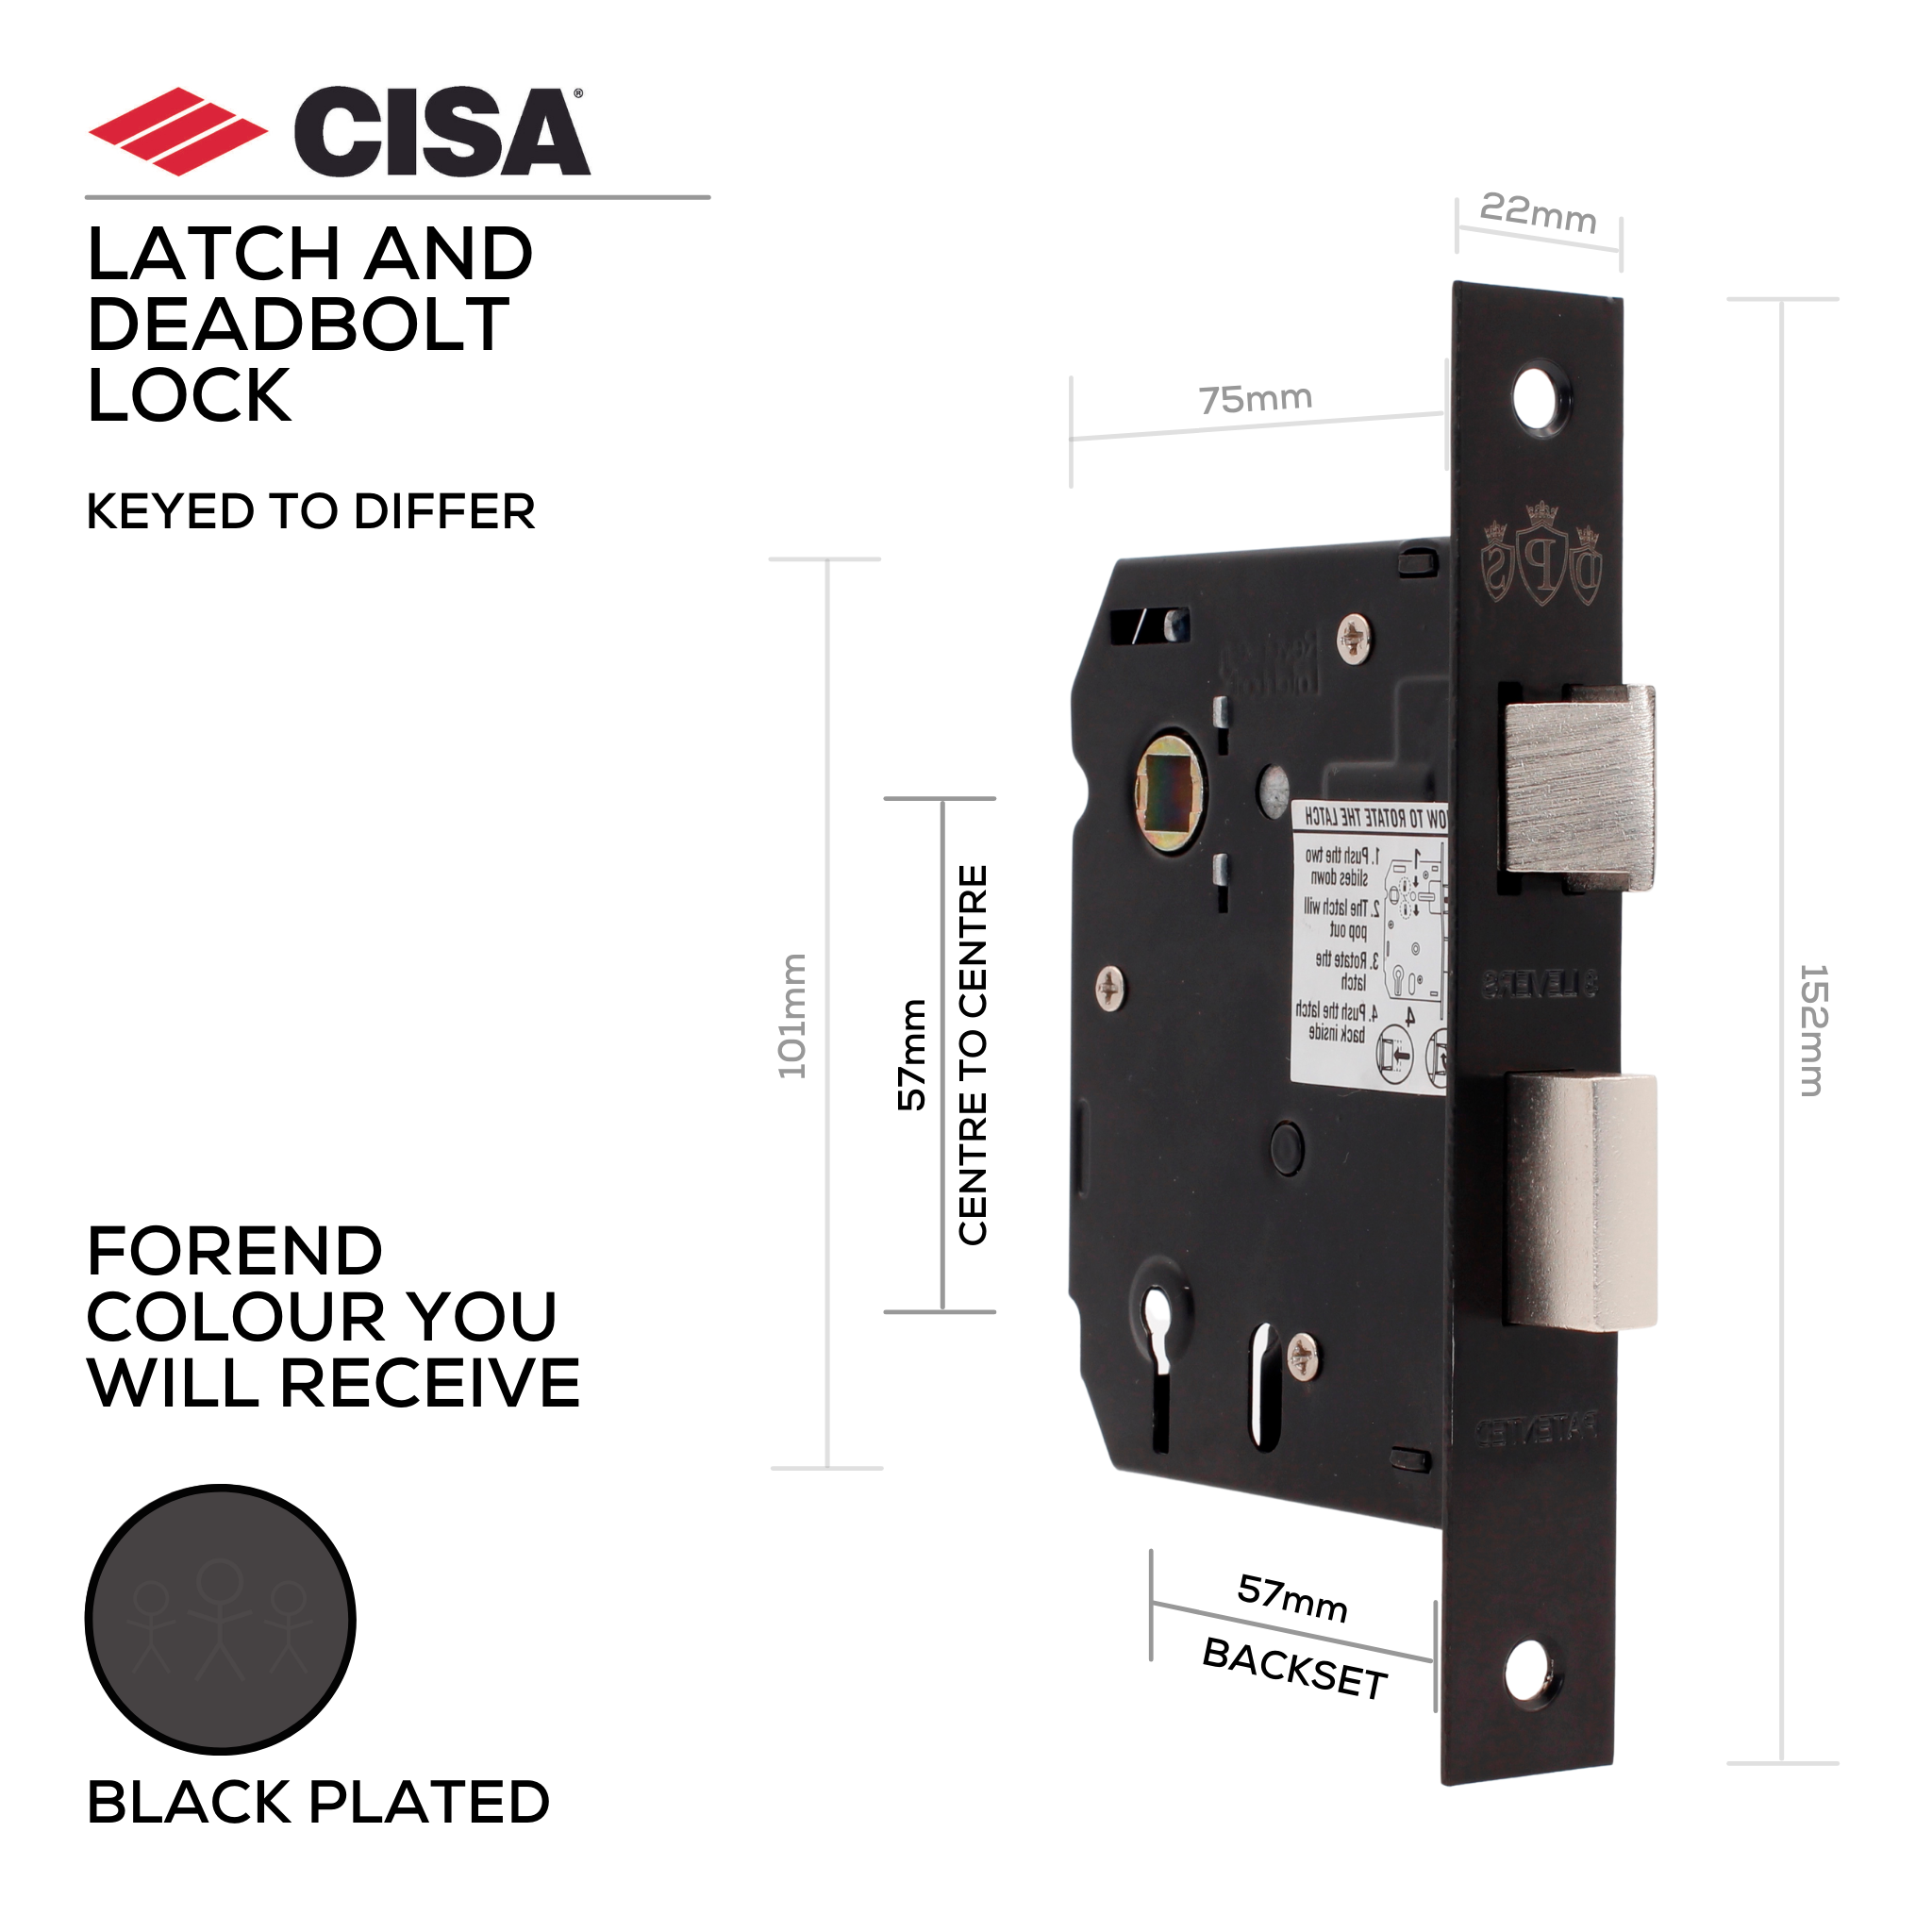 DPS3L-57-BL, Latch & Deadbolt Lock, Lever (Key), 3 Lever Lock, Keyed to Differ, 3 Keys, 57mm (Backset), 57mm (ctc), Black Plated, CISA